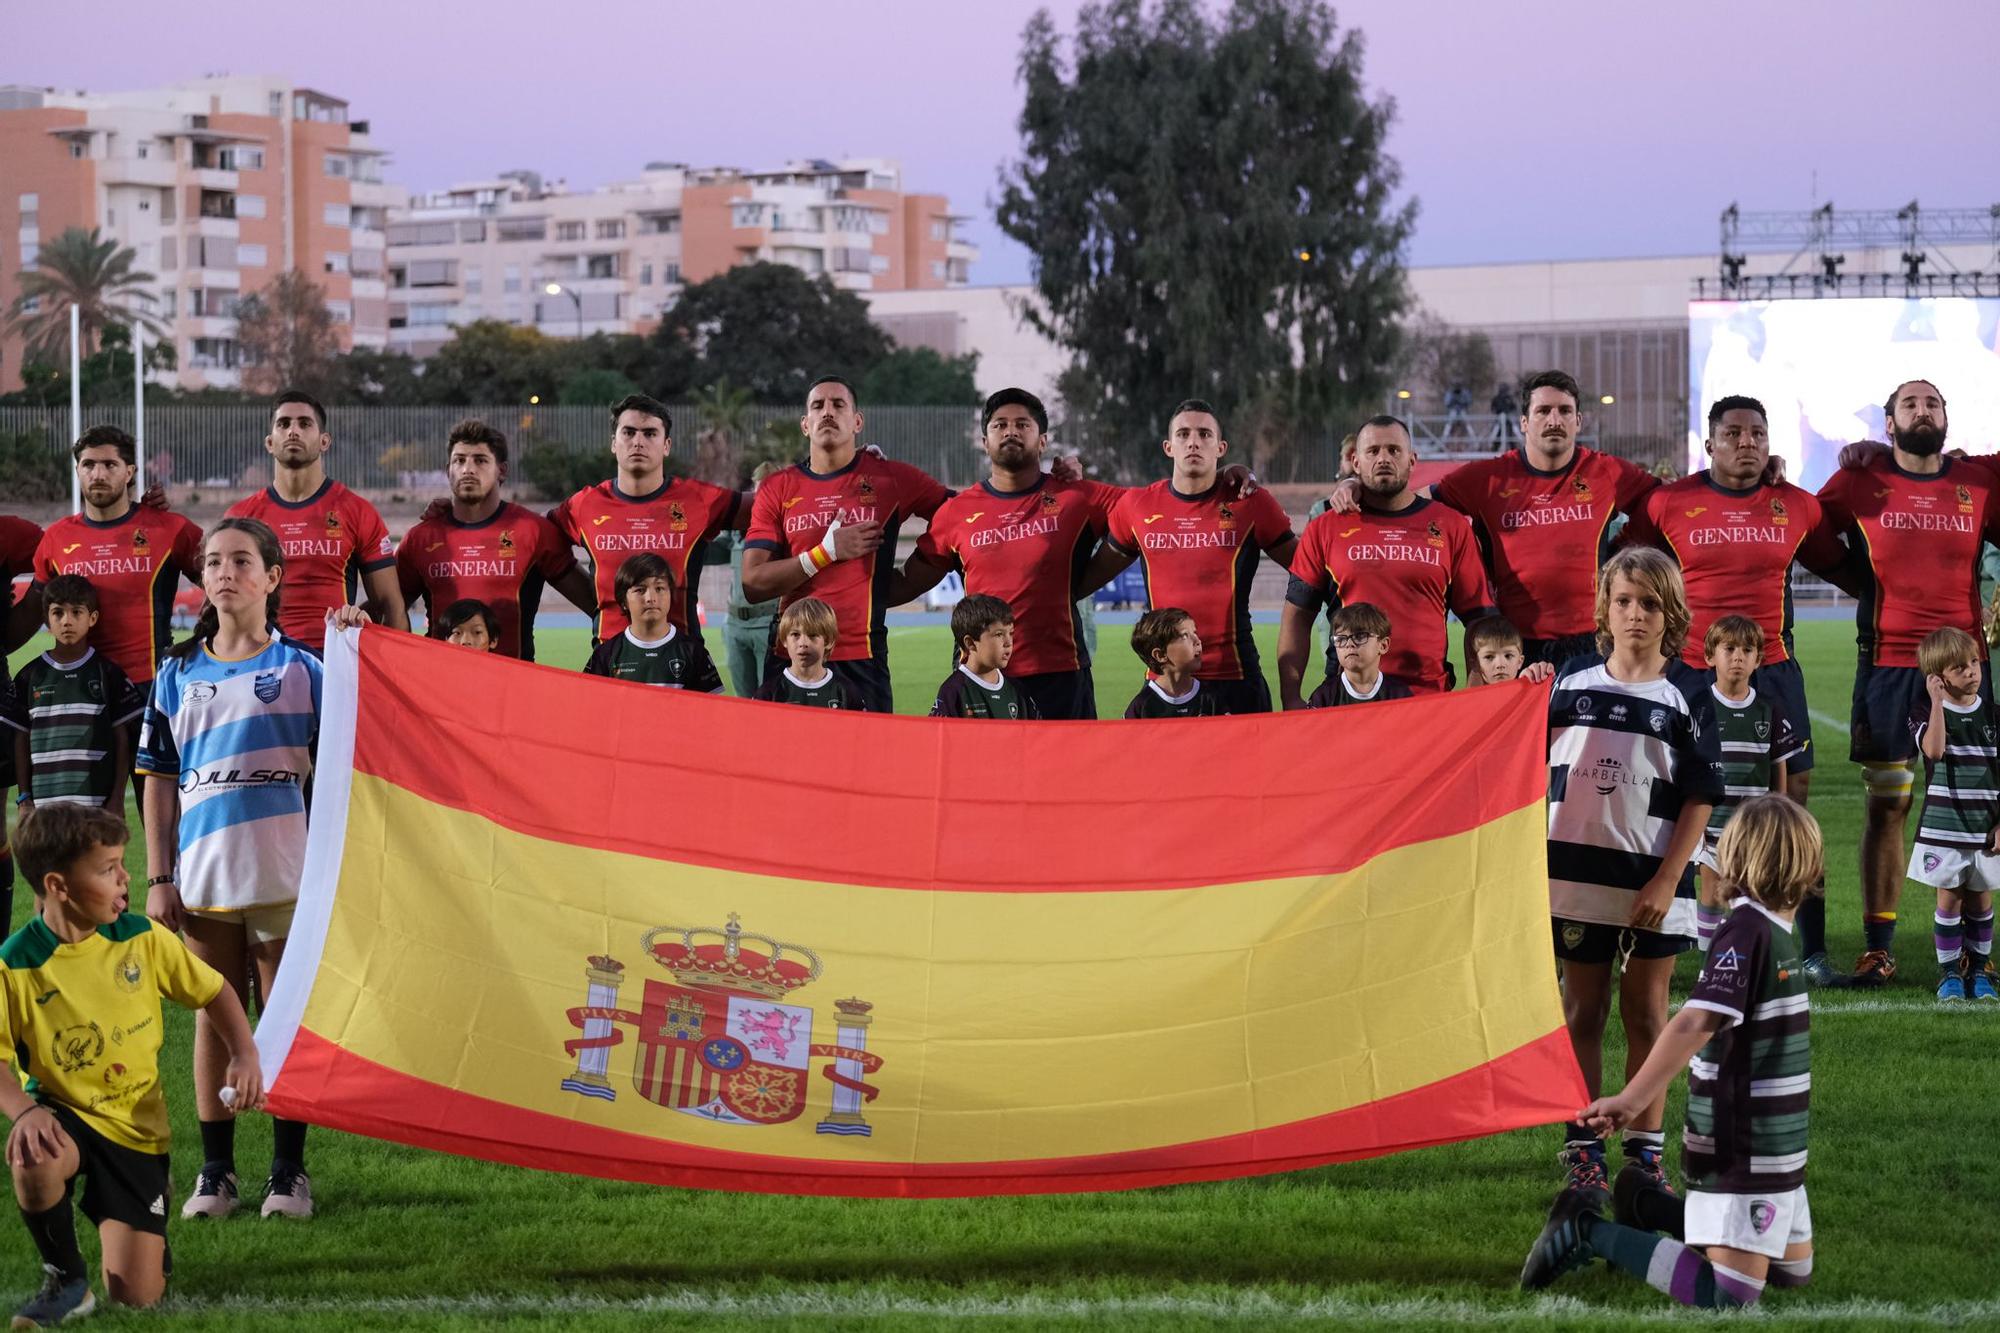 Málaga disfruta del España - Tonga de rugby